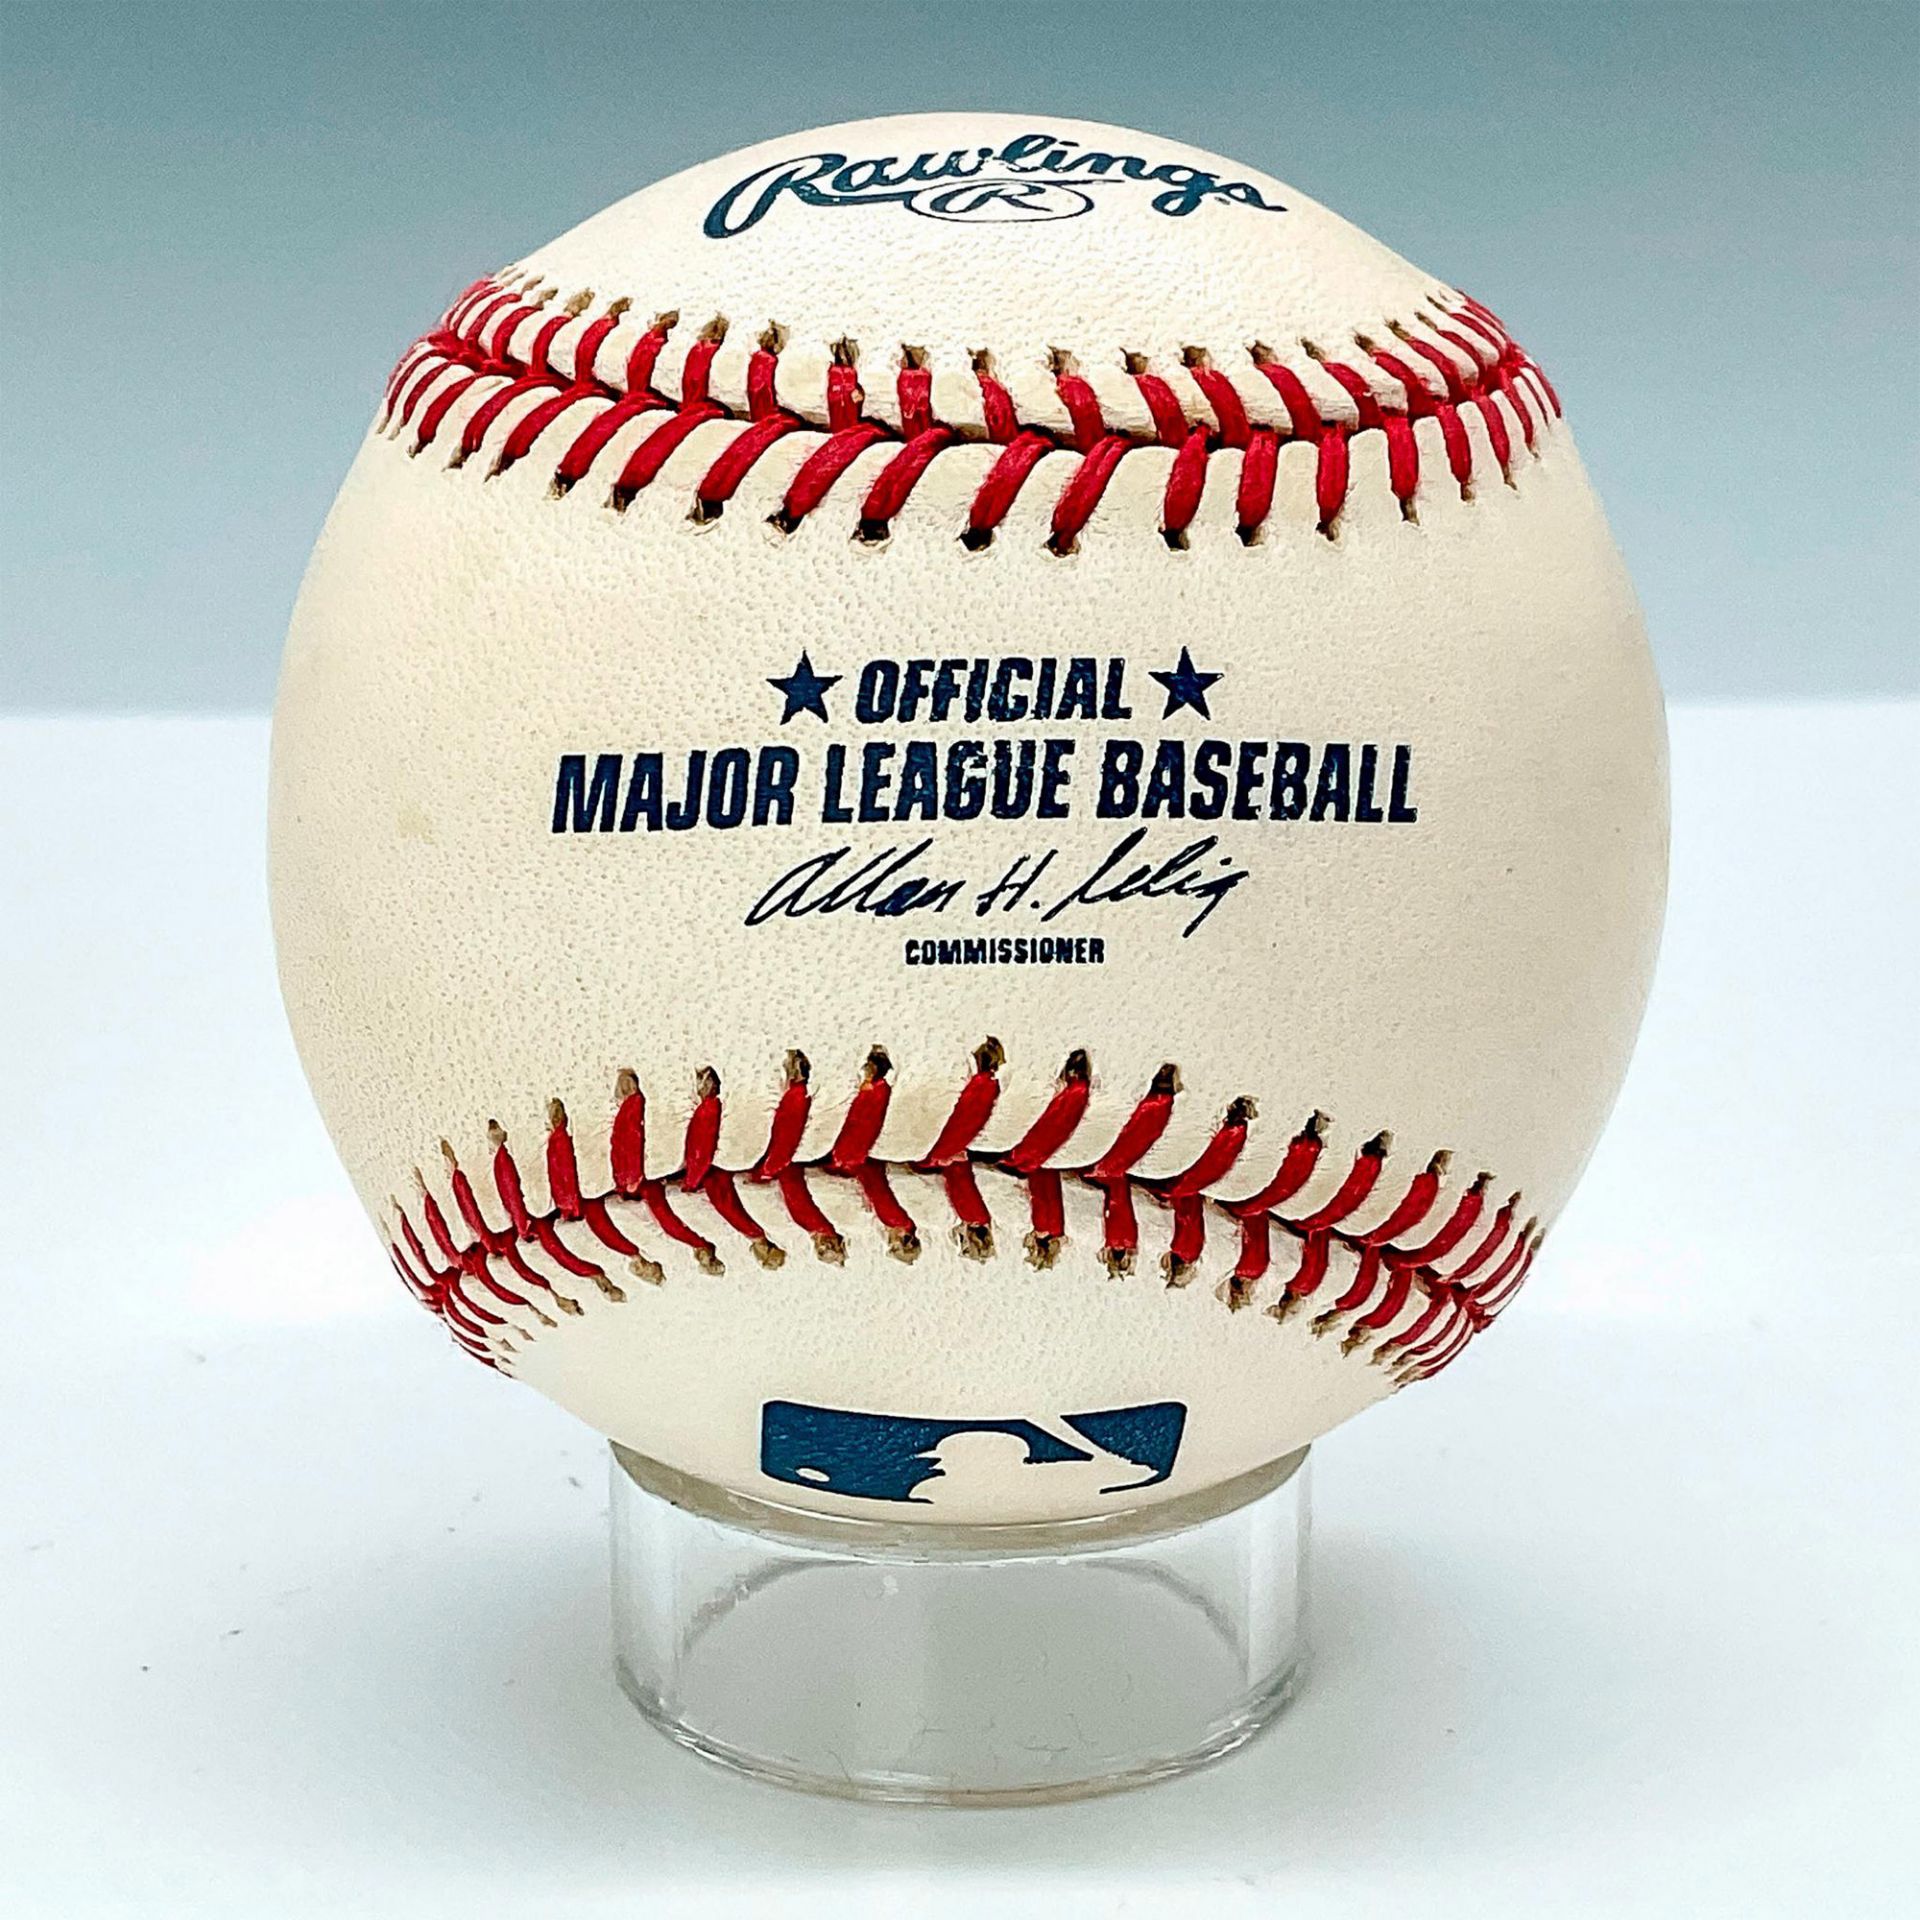 Josh Beckett Autographed Baseball Official MLB Ball - Image 2 of 2